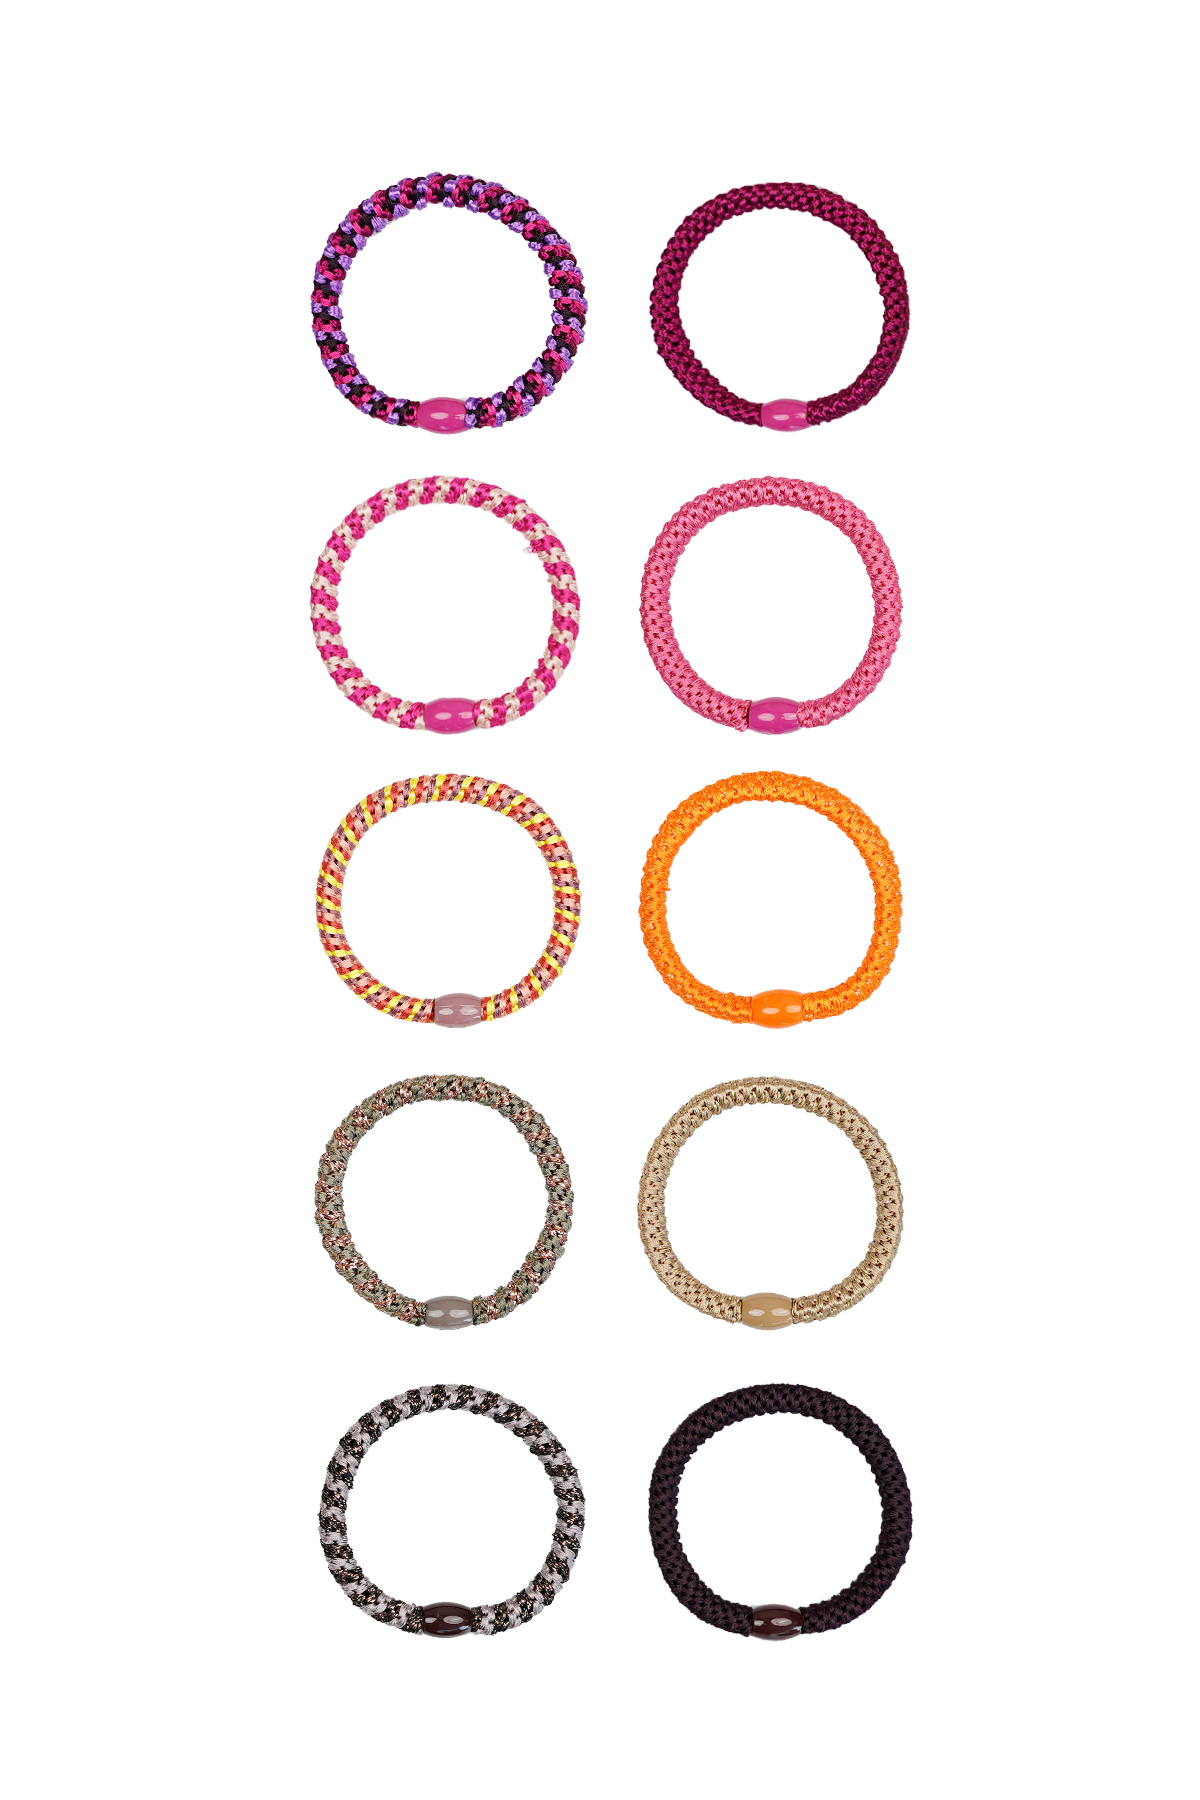 Hair elastic bracelets box bright and basic - multi